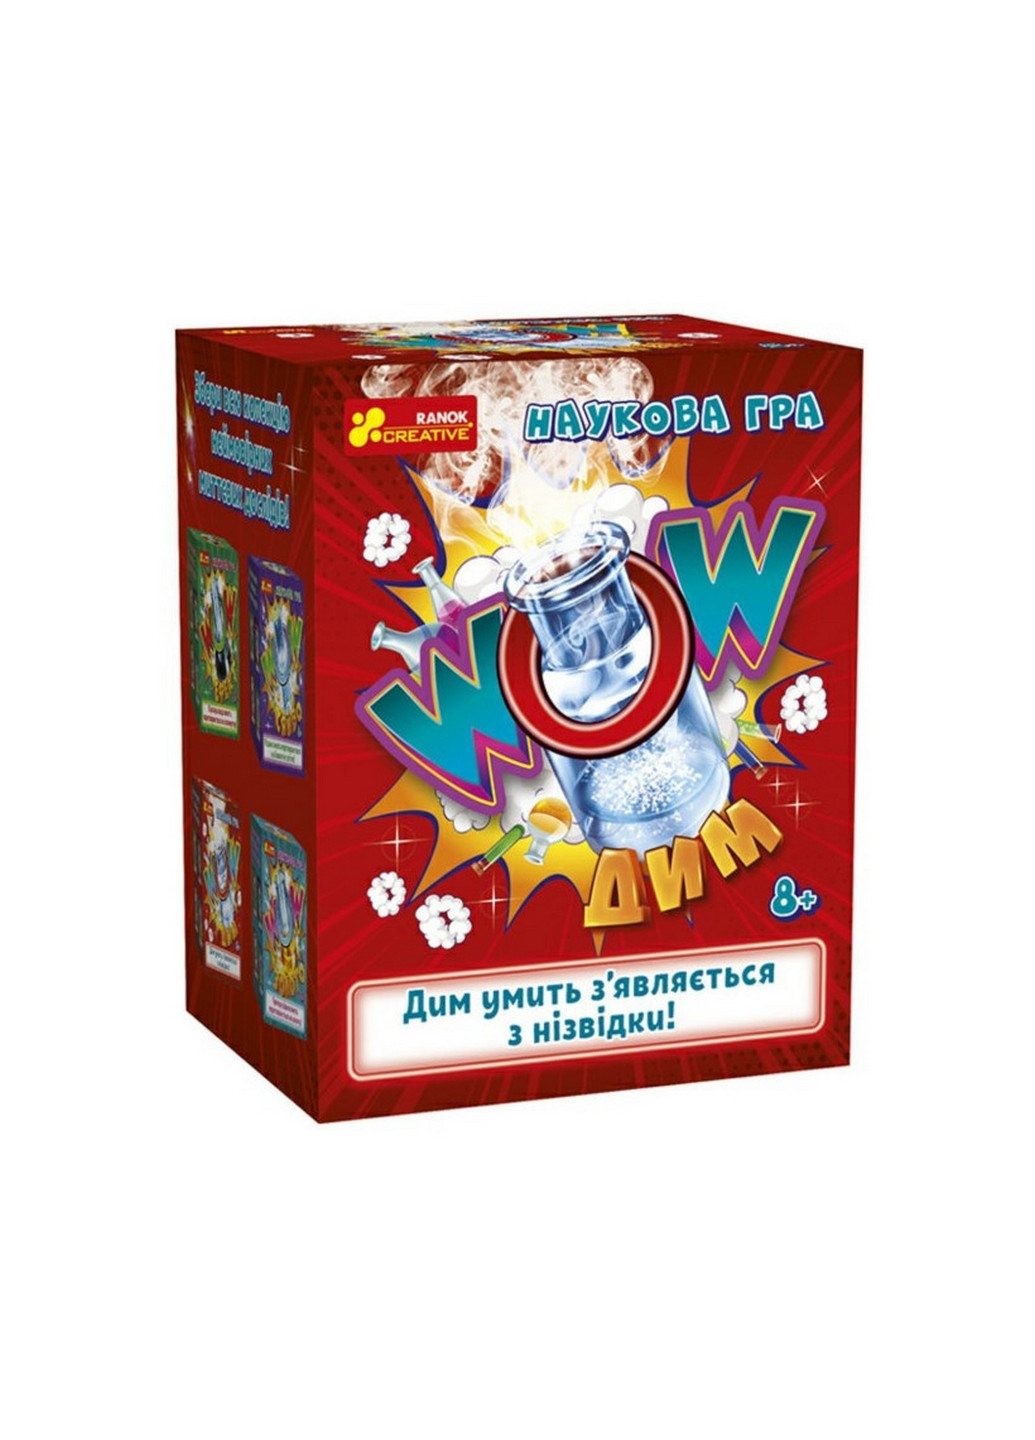 Детская научная игра дым украинском языке 13,7х10,8х8,7 см Ranok Creative (260496676)